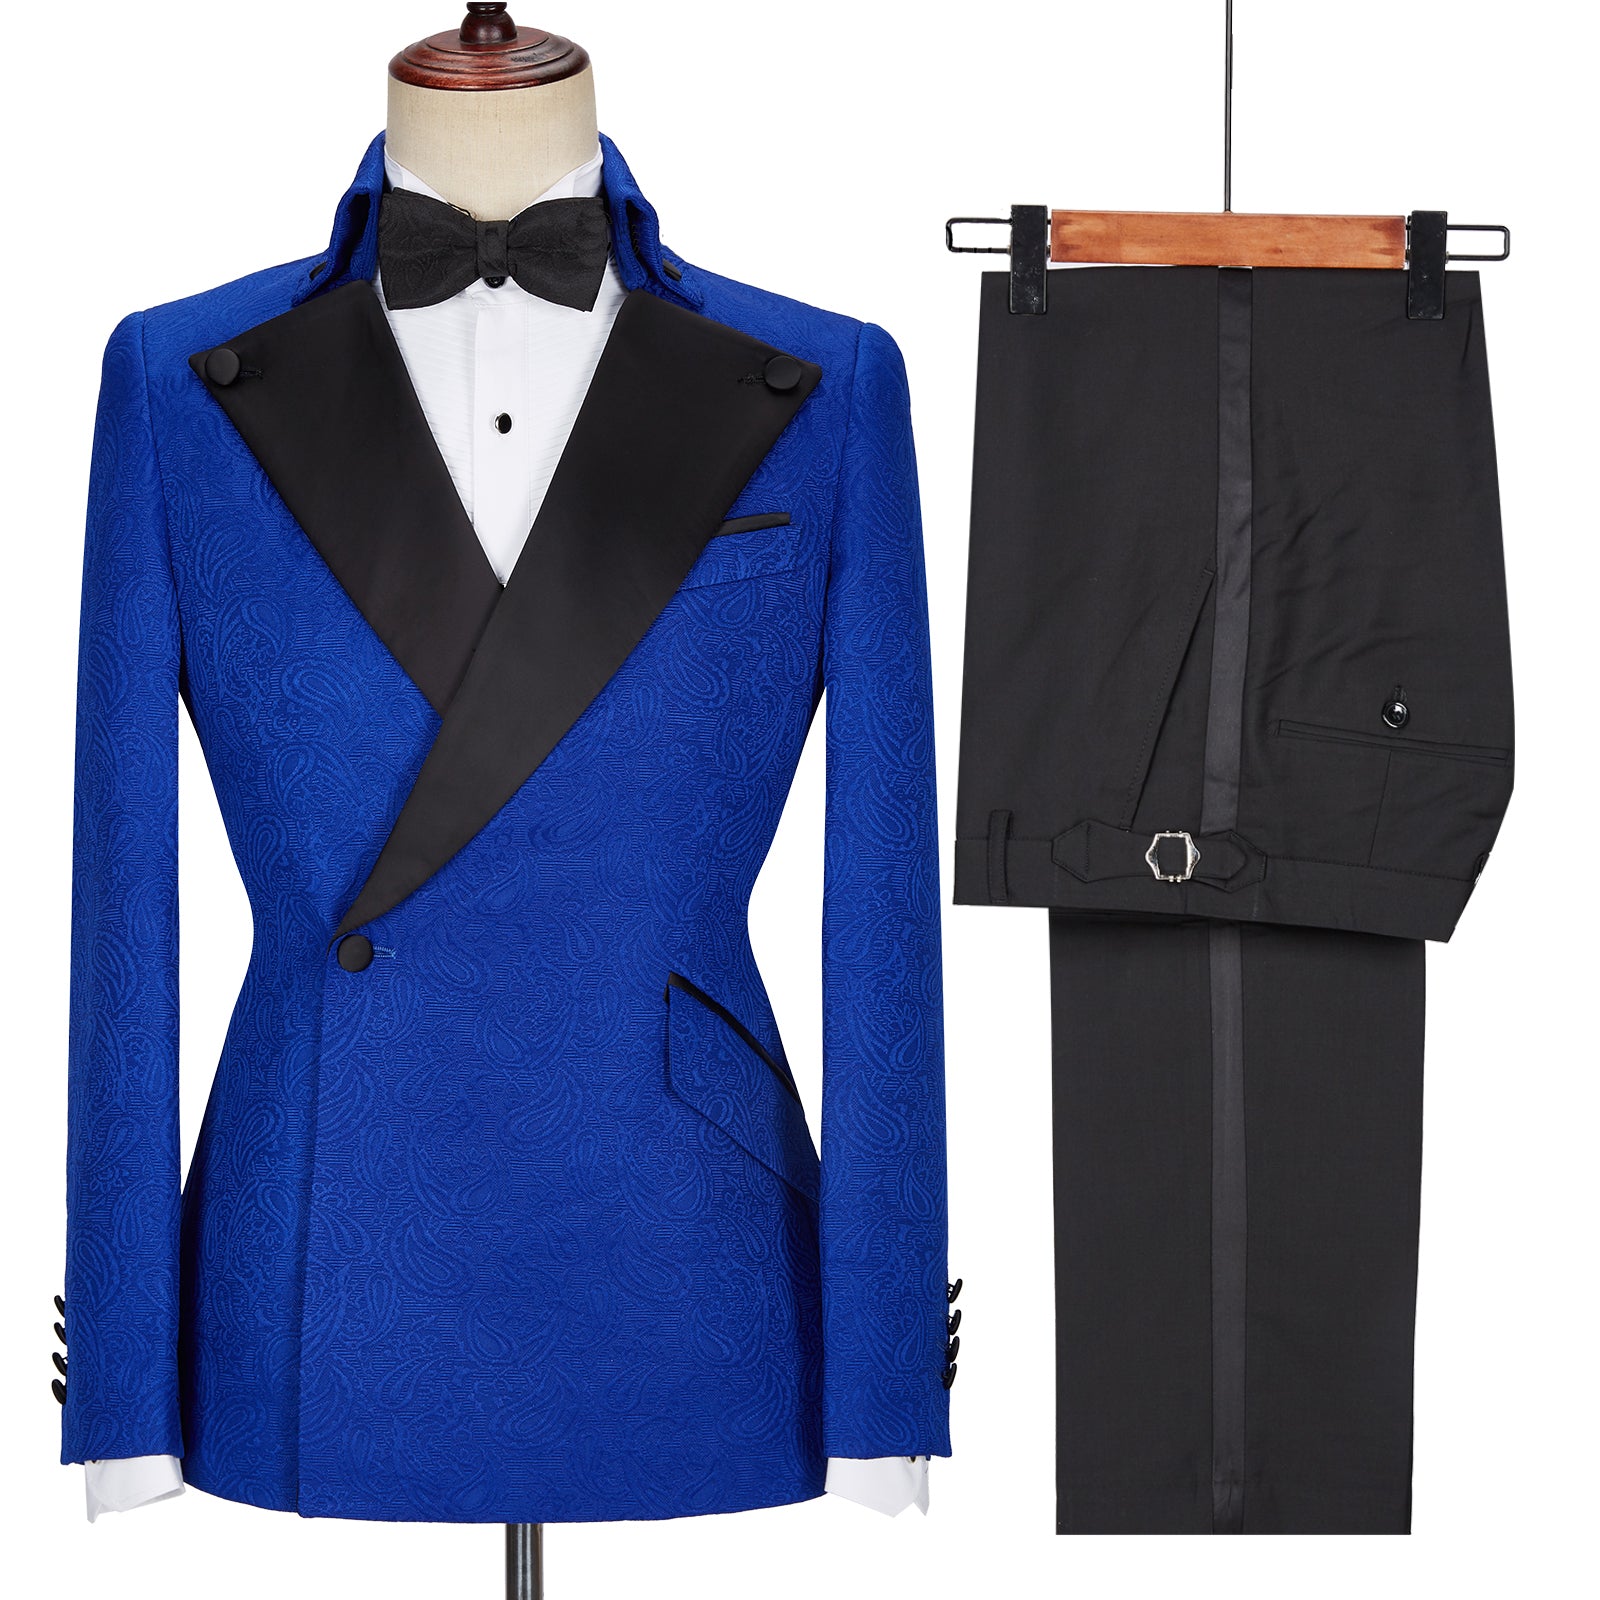 Royal Blue Jacquard Wedding Suits with Black Lapel - Dean Fashion New Arrival